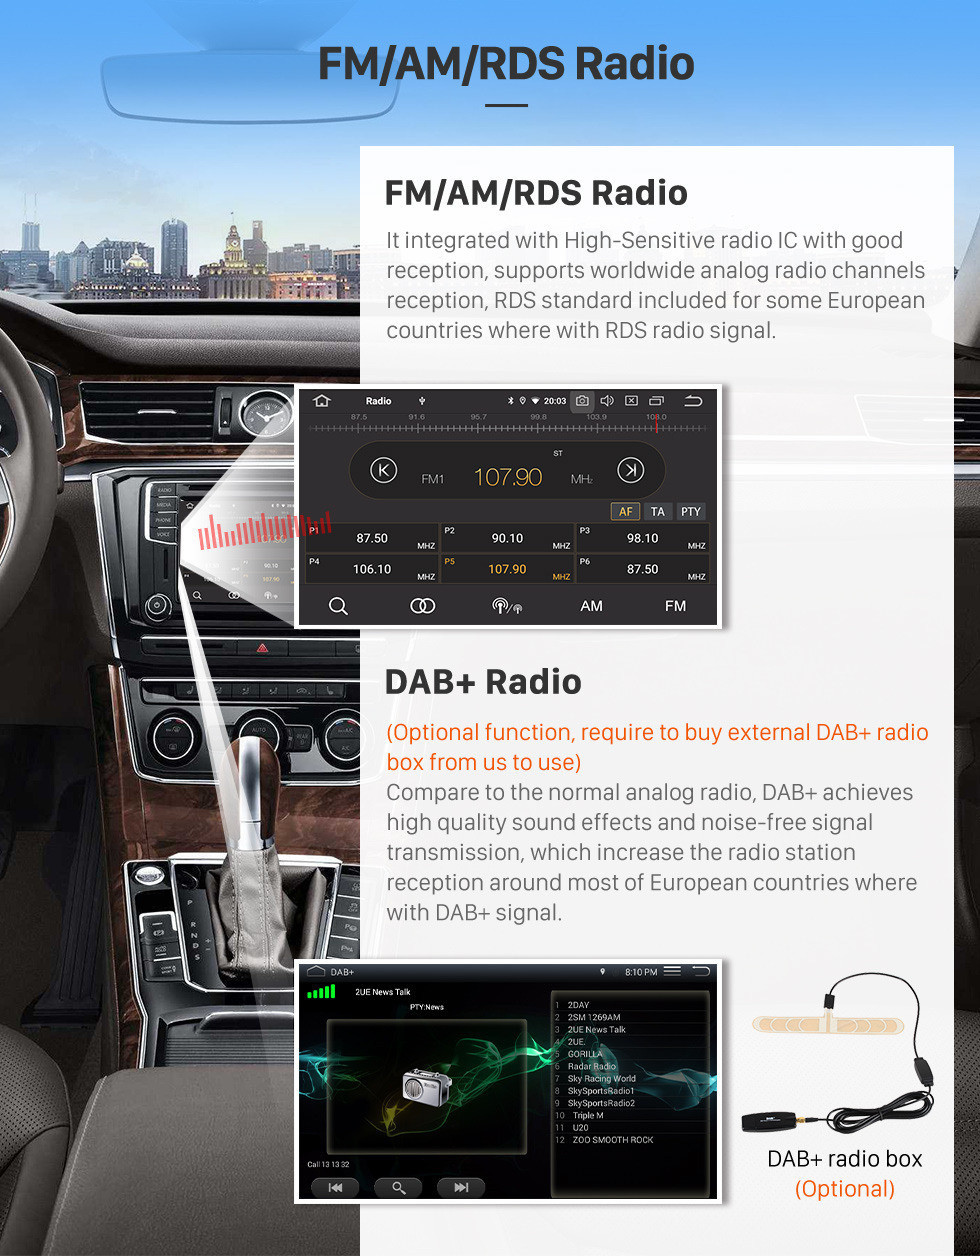 Seicane 8 inch Android 12.0 GPS Navigation Radio for 2017-2019 Toyota Corolla Bluetooth Wifi HD Touchscreen Music Carplay USB support DVR Digital TV 1080P Video